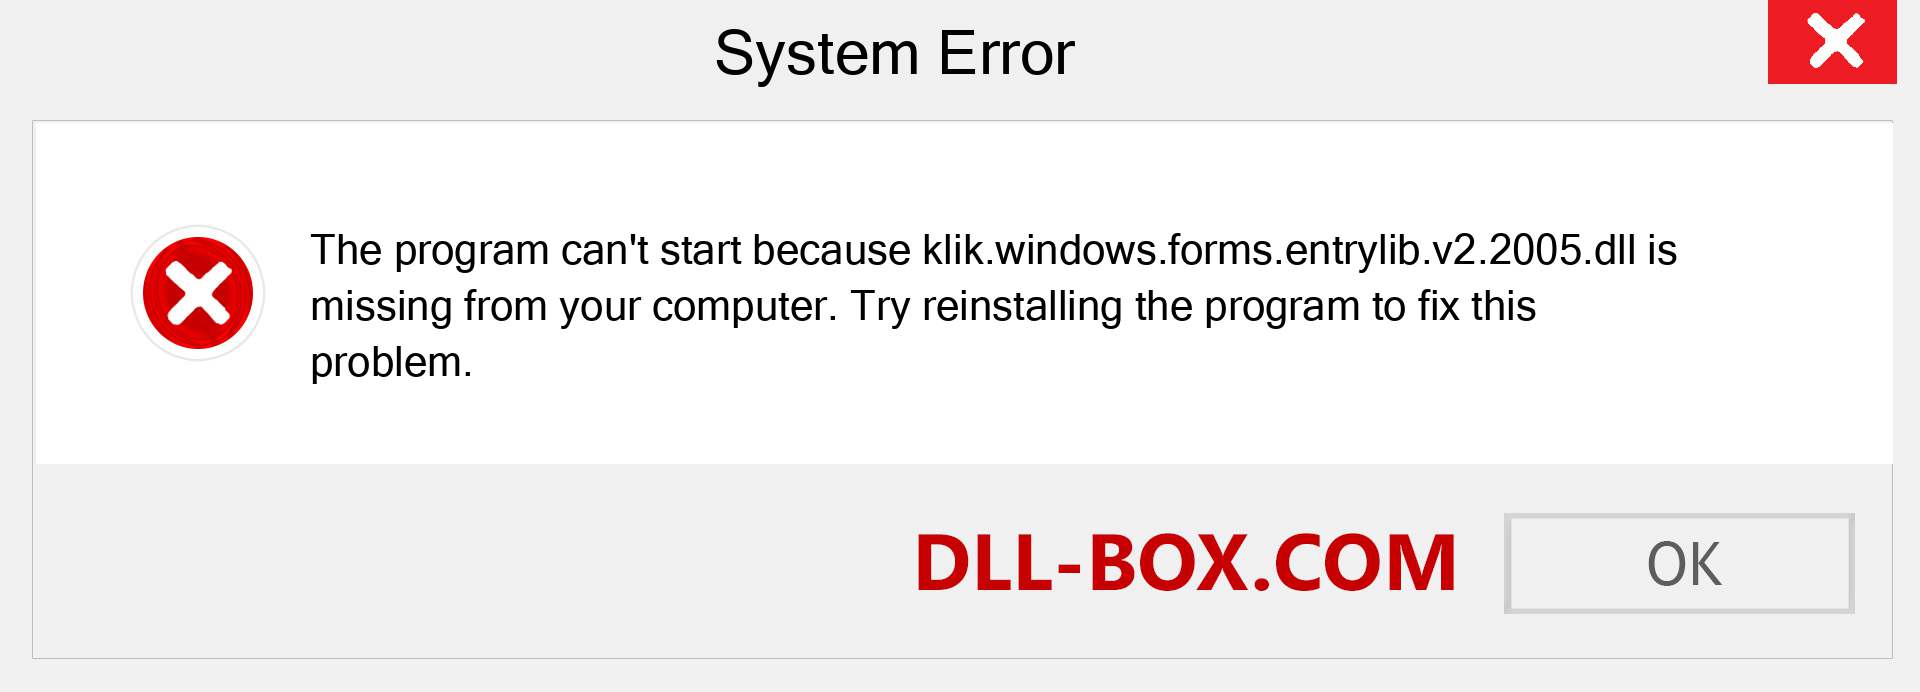  klik.windows.forms.entrylib.v2.2005.dll file is missing?. Download for Windows 7, 8, 10 - Fix  klik.windows.forms.entrylib.v2.2005 dll Missing Error on Windows, photos, images